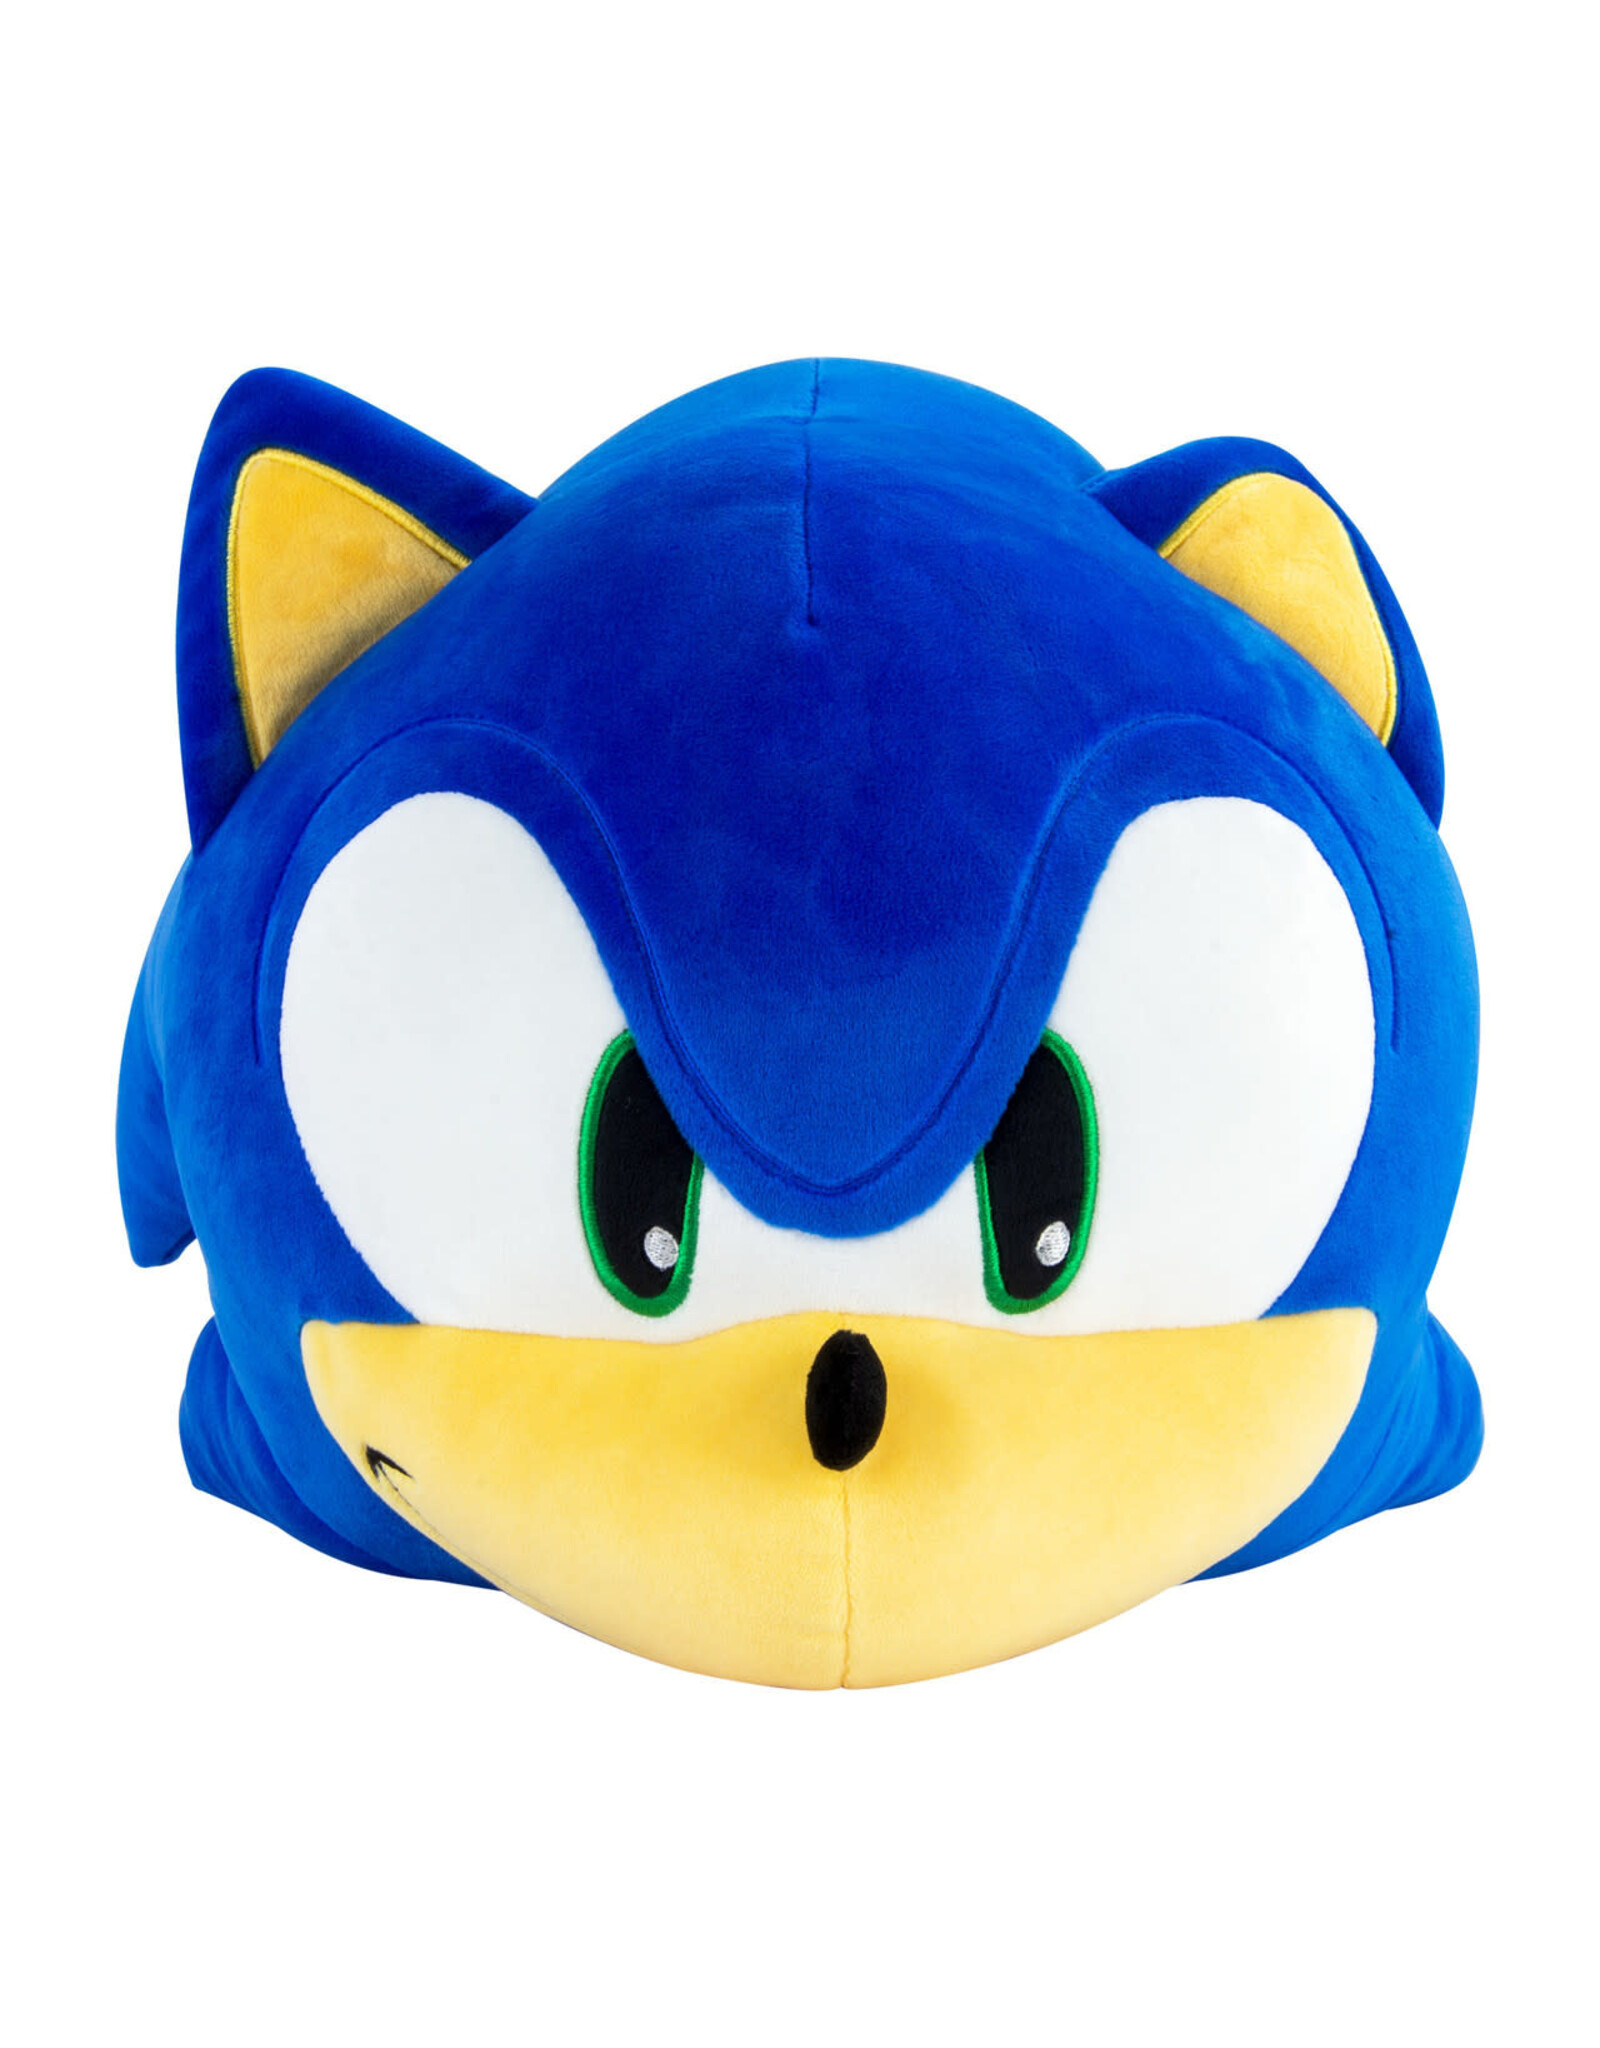 Tomy Sonic The Hedgehog Mega 15 inch Plush